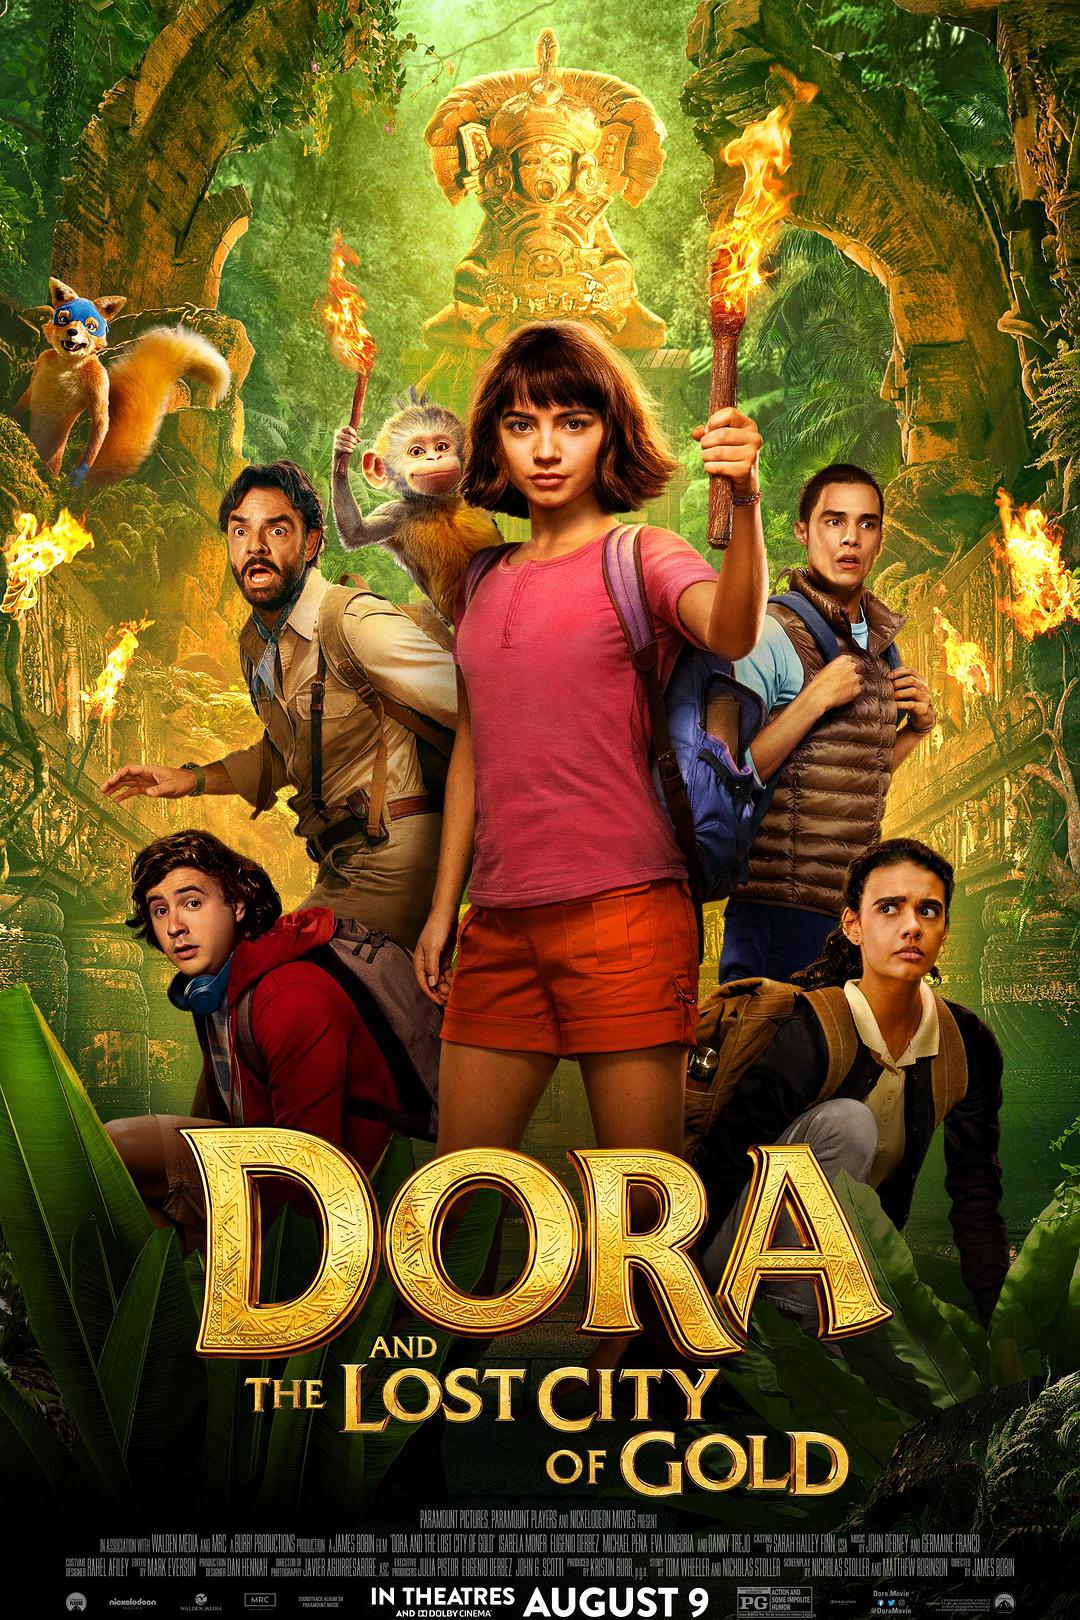 爱探险的朵拉:消失的黄金城 Dora.and.the.Lost.City.of.Gold.2019.1080p.BluRay.AVC.TrueHD.7.1.Atmos-Whales 37.02GB-1.png